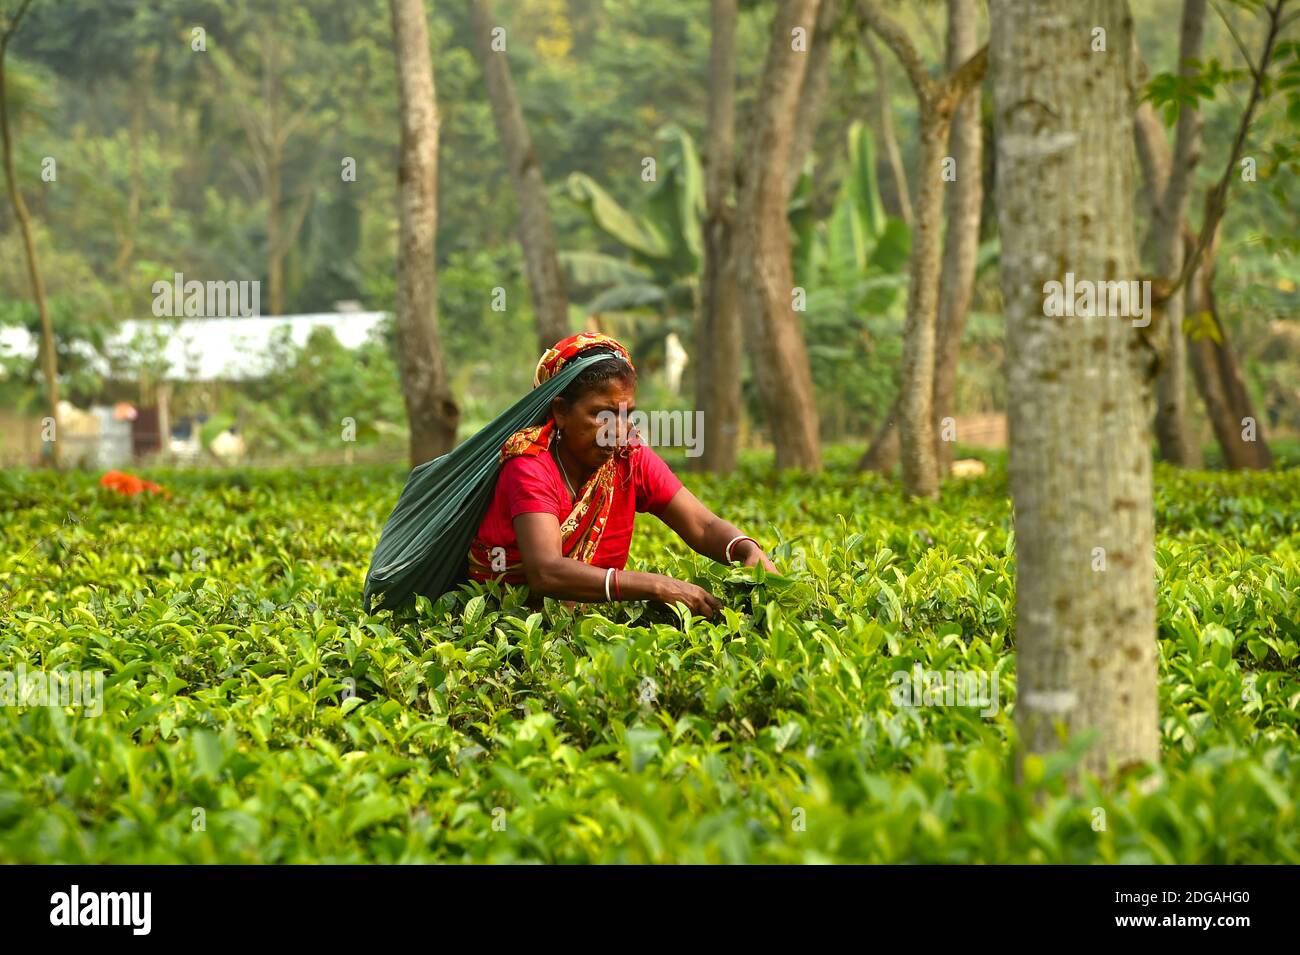 (201208) -- SREEMANGAL, Dec. 8, 2020 (Xinhua) -- A woman picks tea leaves at a garden in Sreemangal, Bangladesh, Dec. 7, 2020. (Xinhua) Stock Photo